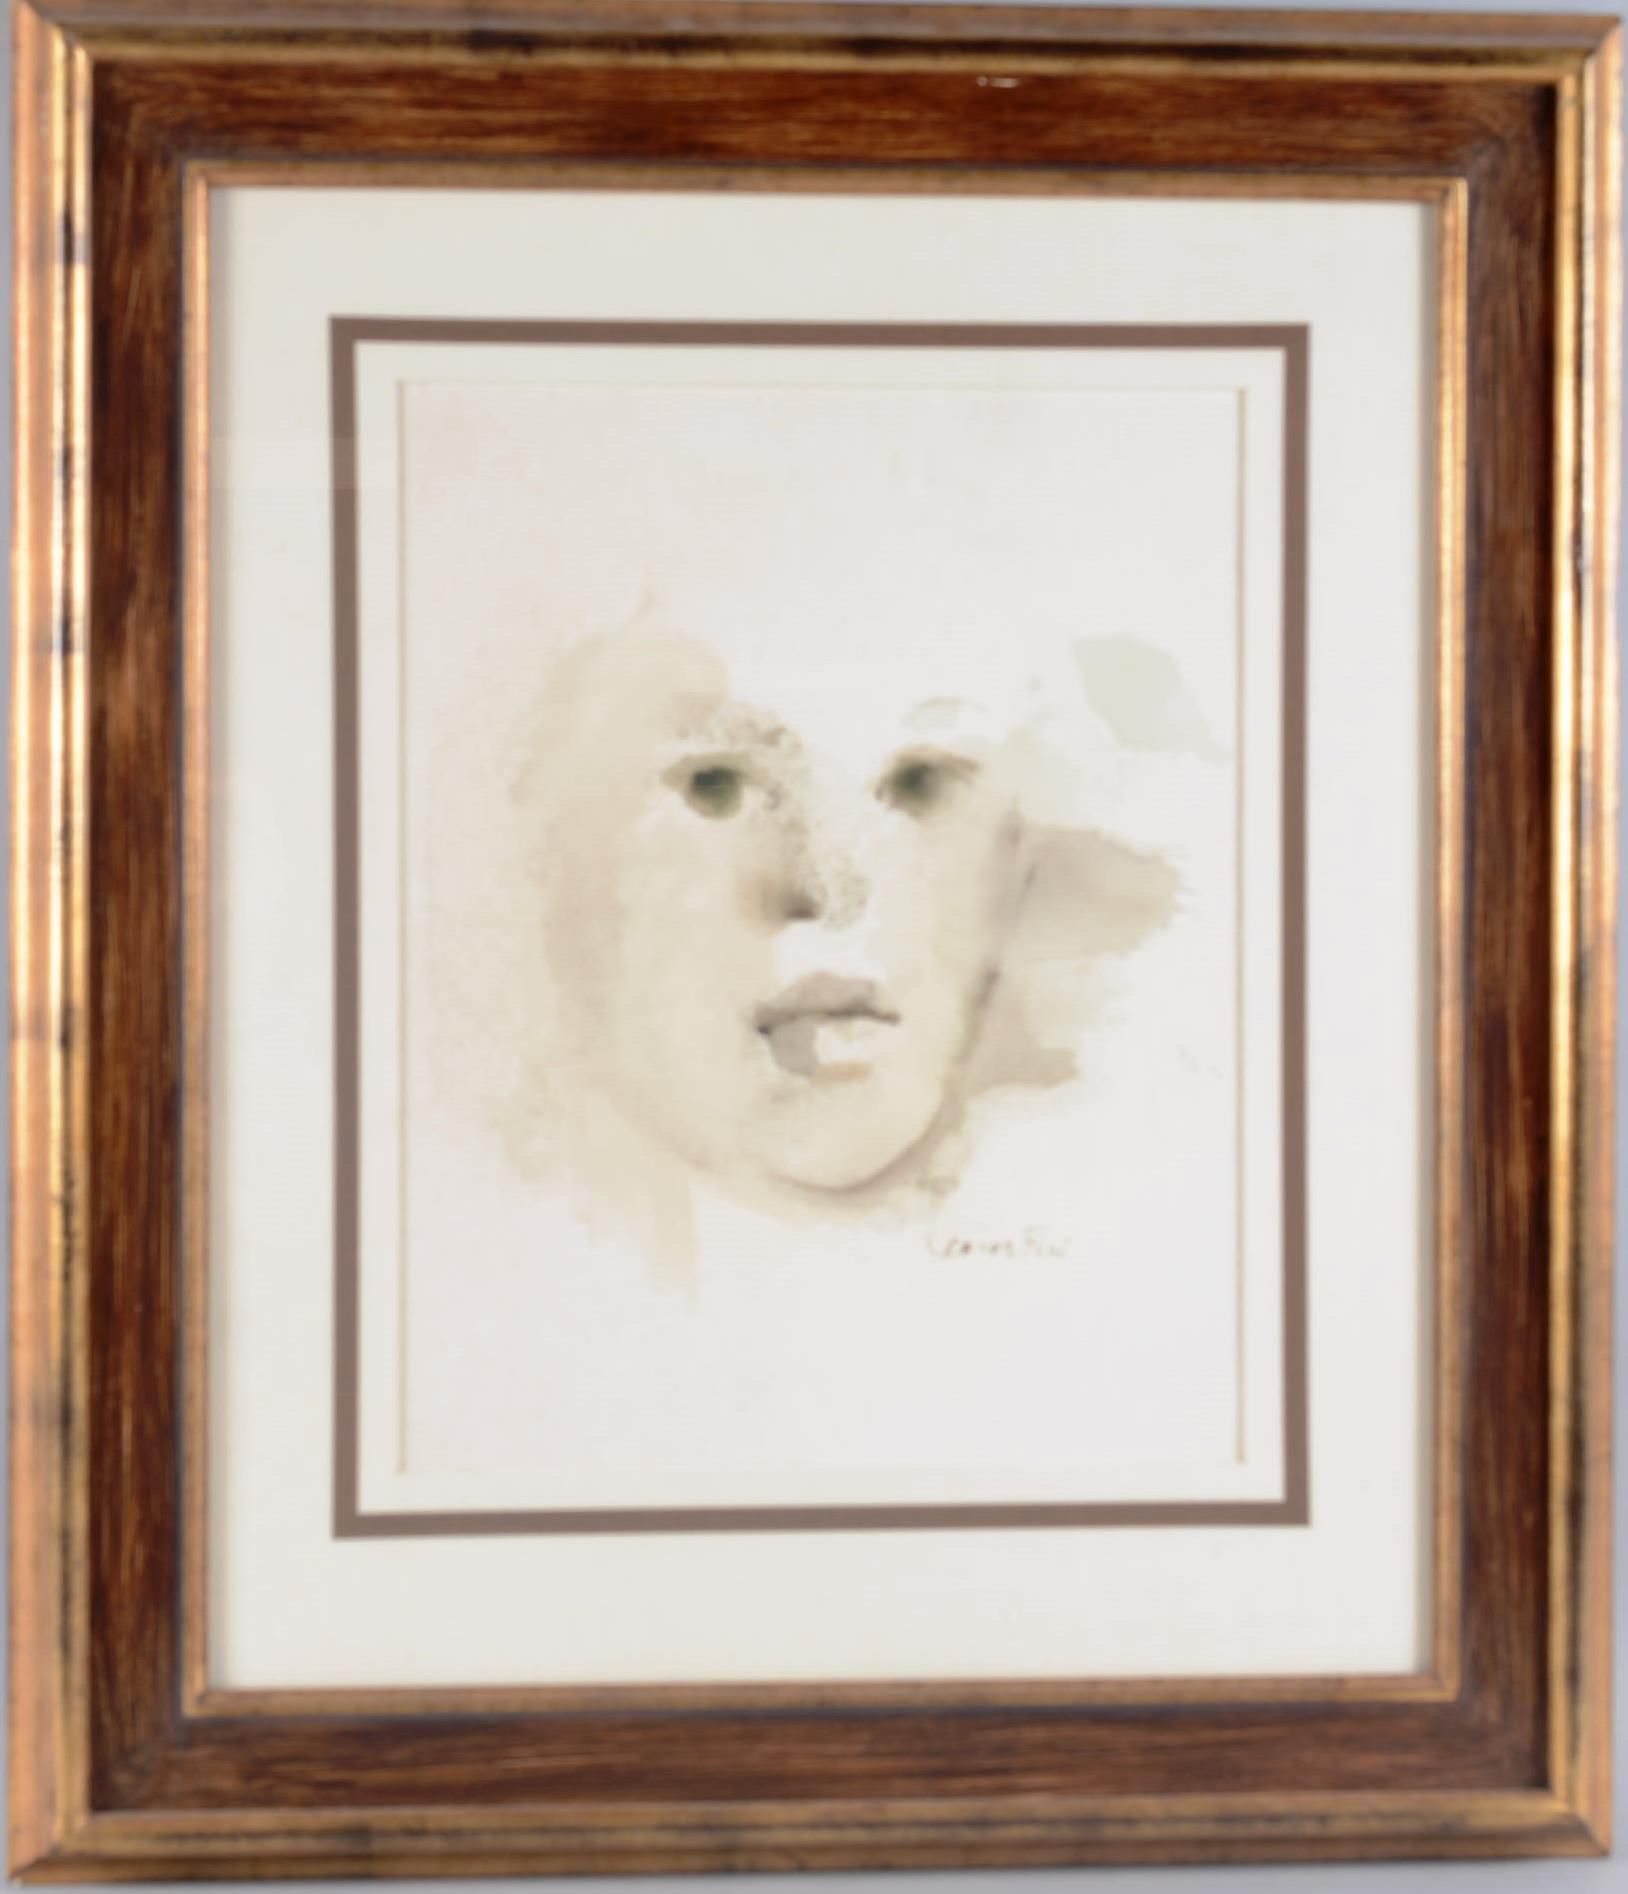 Léonor FINI (1907-1996) 莱昂诺-菲尼 (1907-1996)

"脸"。

水彩画，右下方有签名。

出处：卢森堡私人收藏。- De V&hellip;